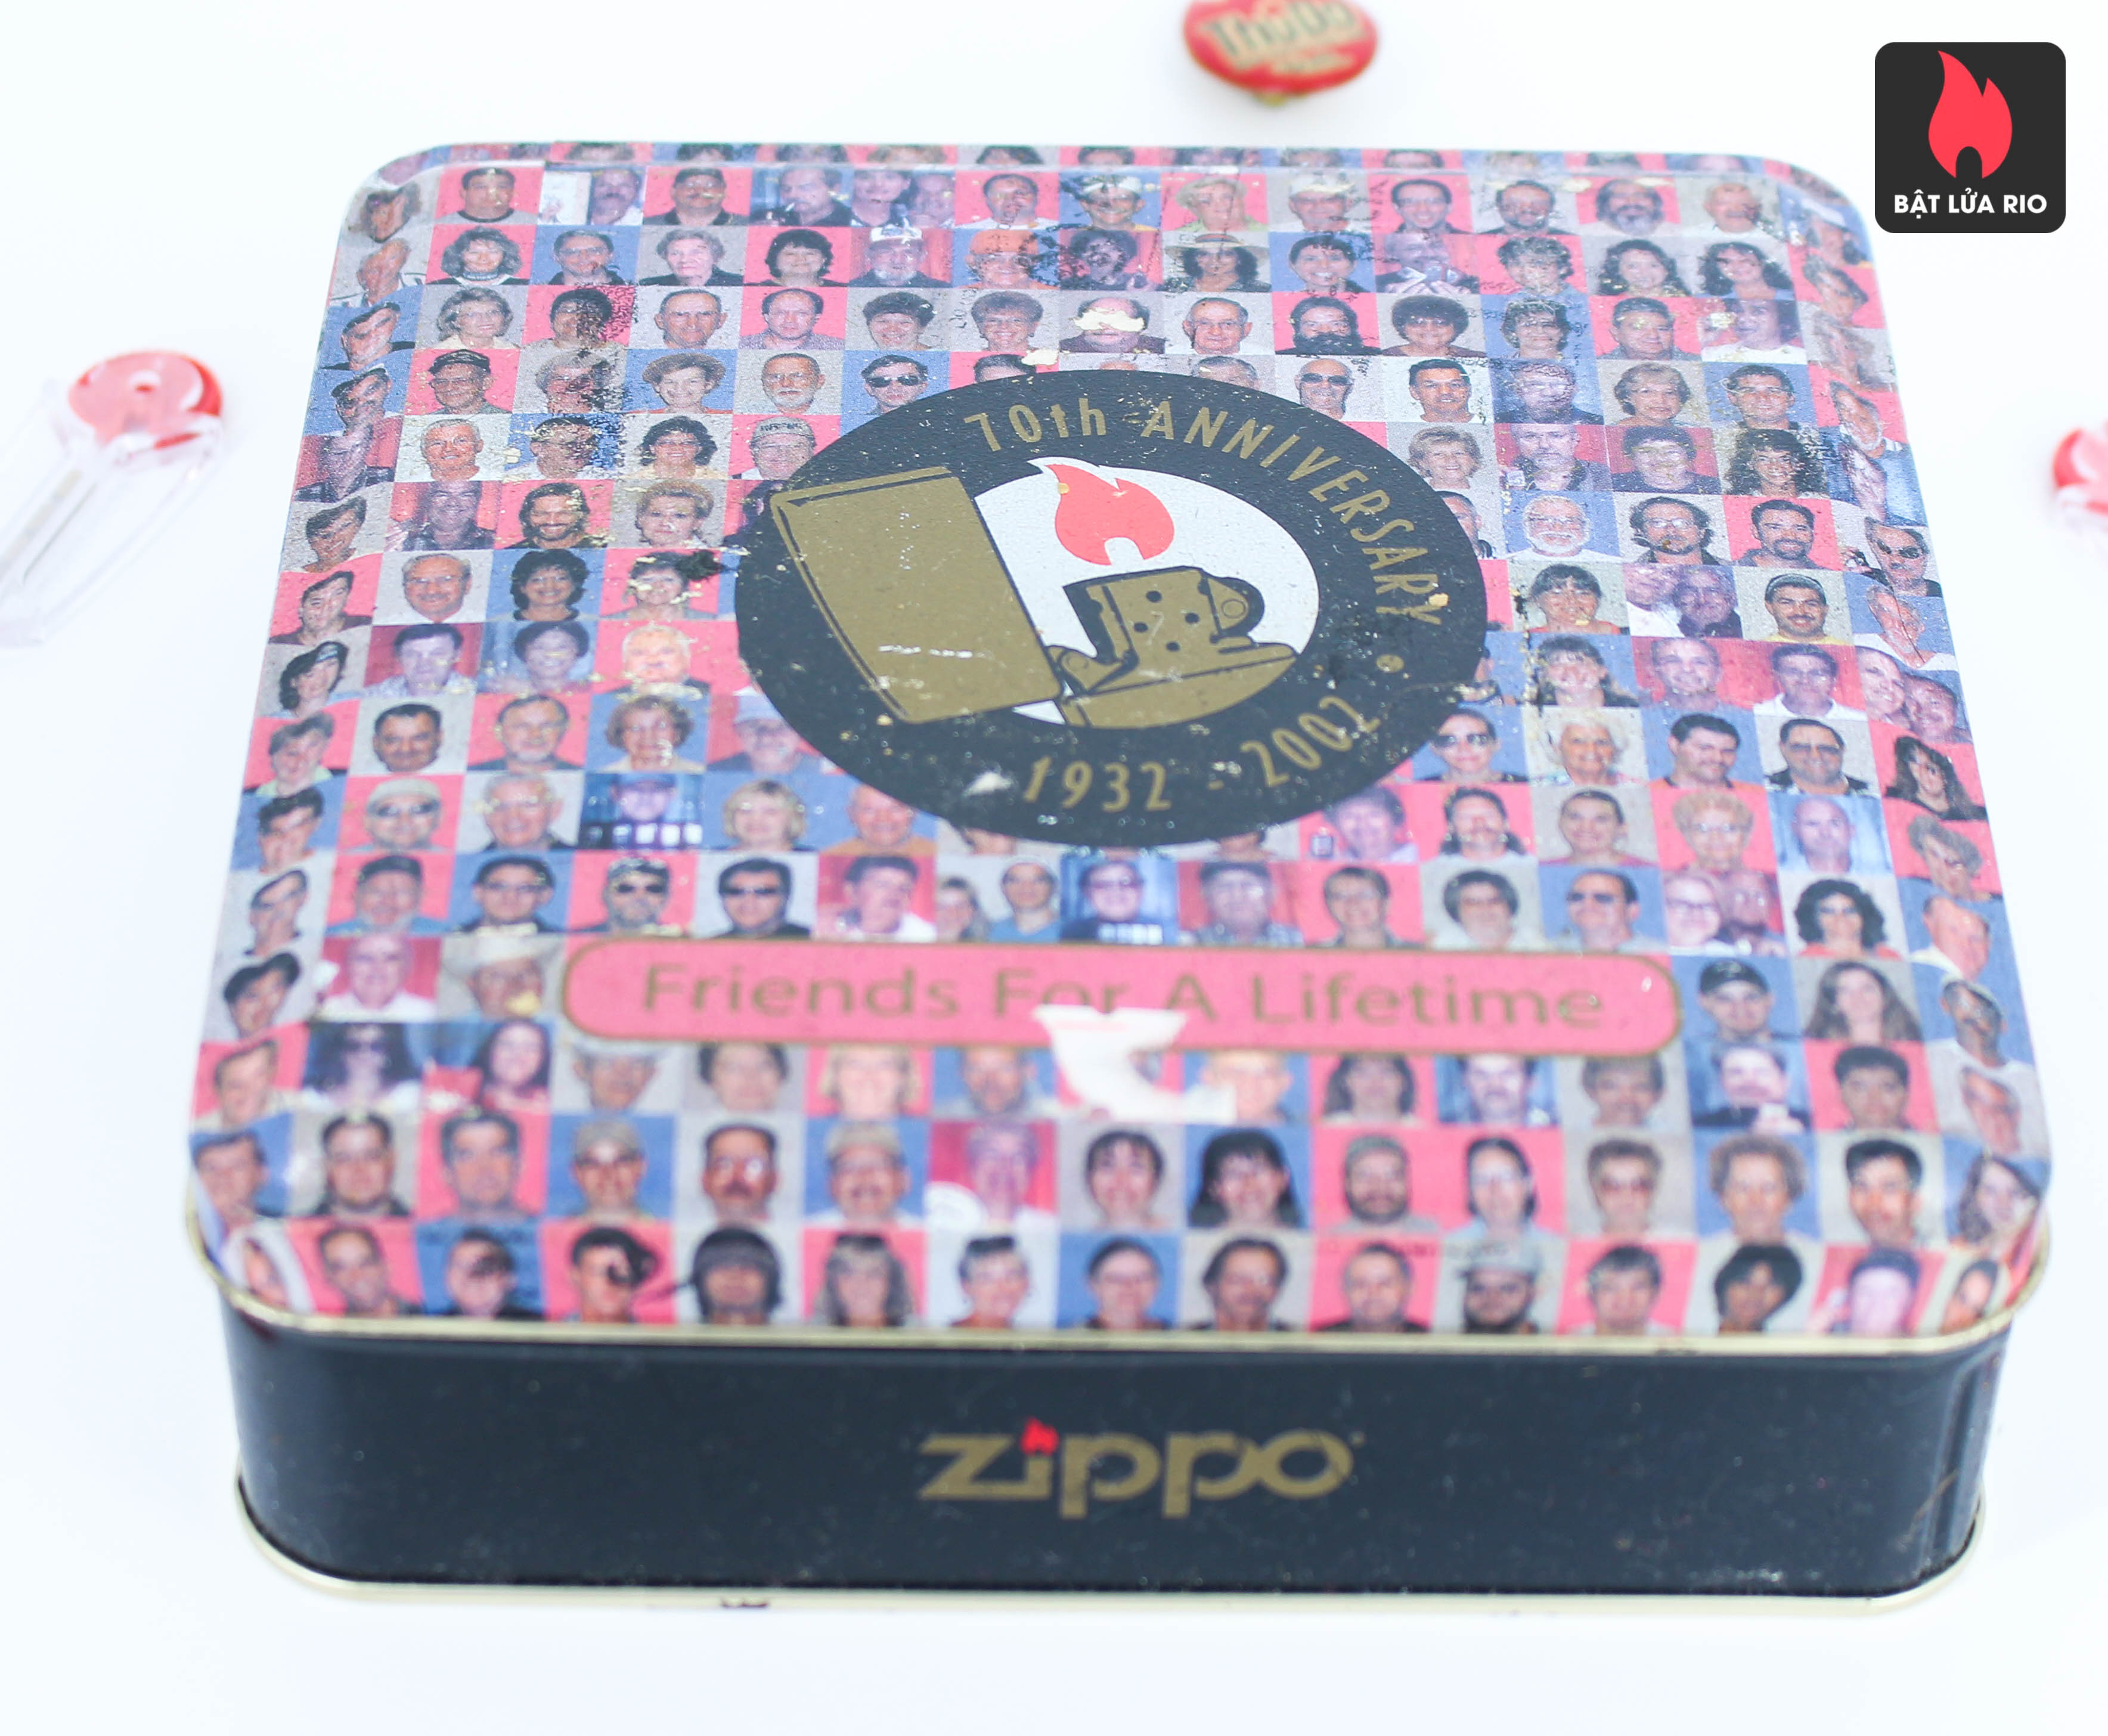 ZIPPO COTY 2002 – KỶ NIỆM 70 NĂM ZIPPO – 70TH ANNIVERSARY 1932 – 2002